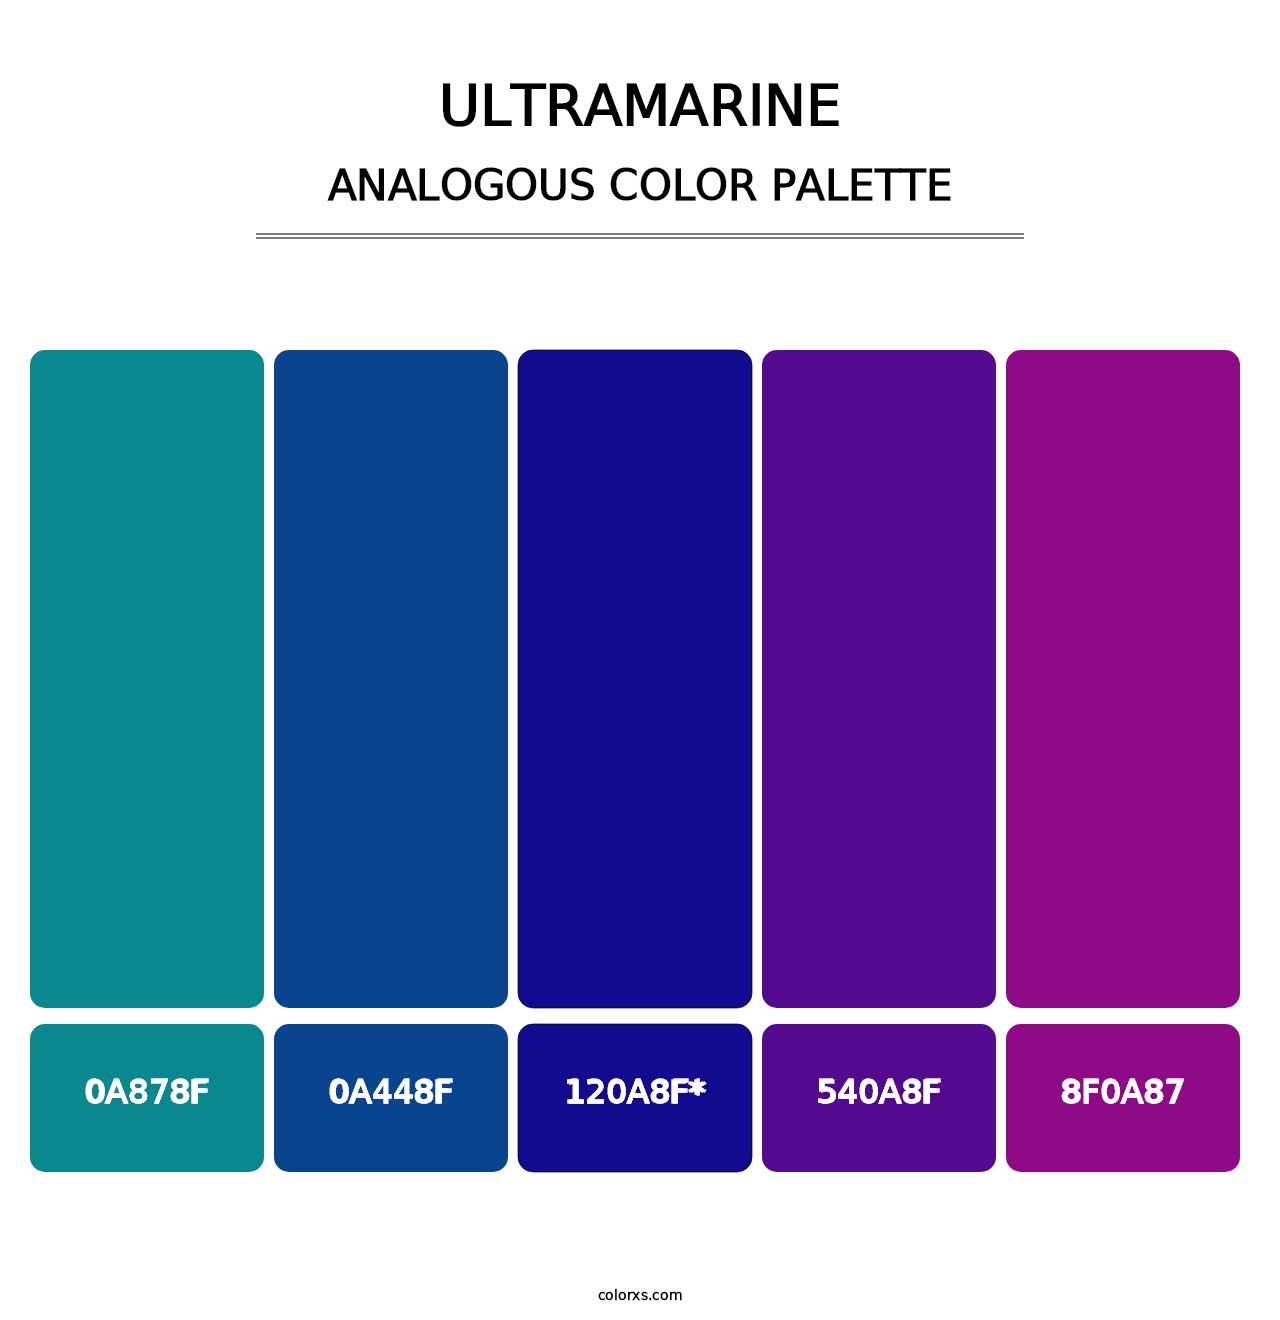 Ultramarine - Analogous Color Palette